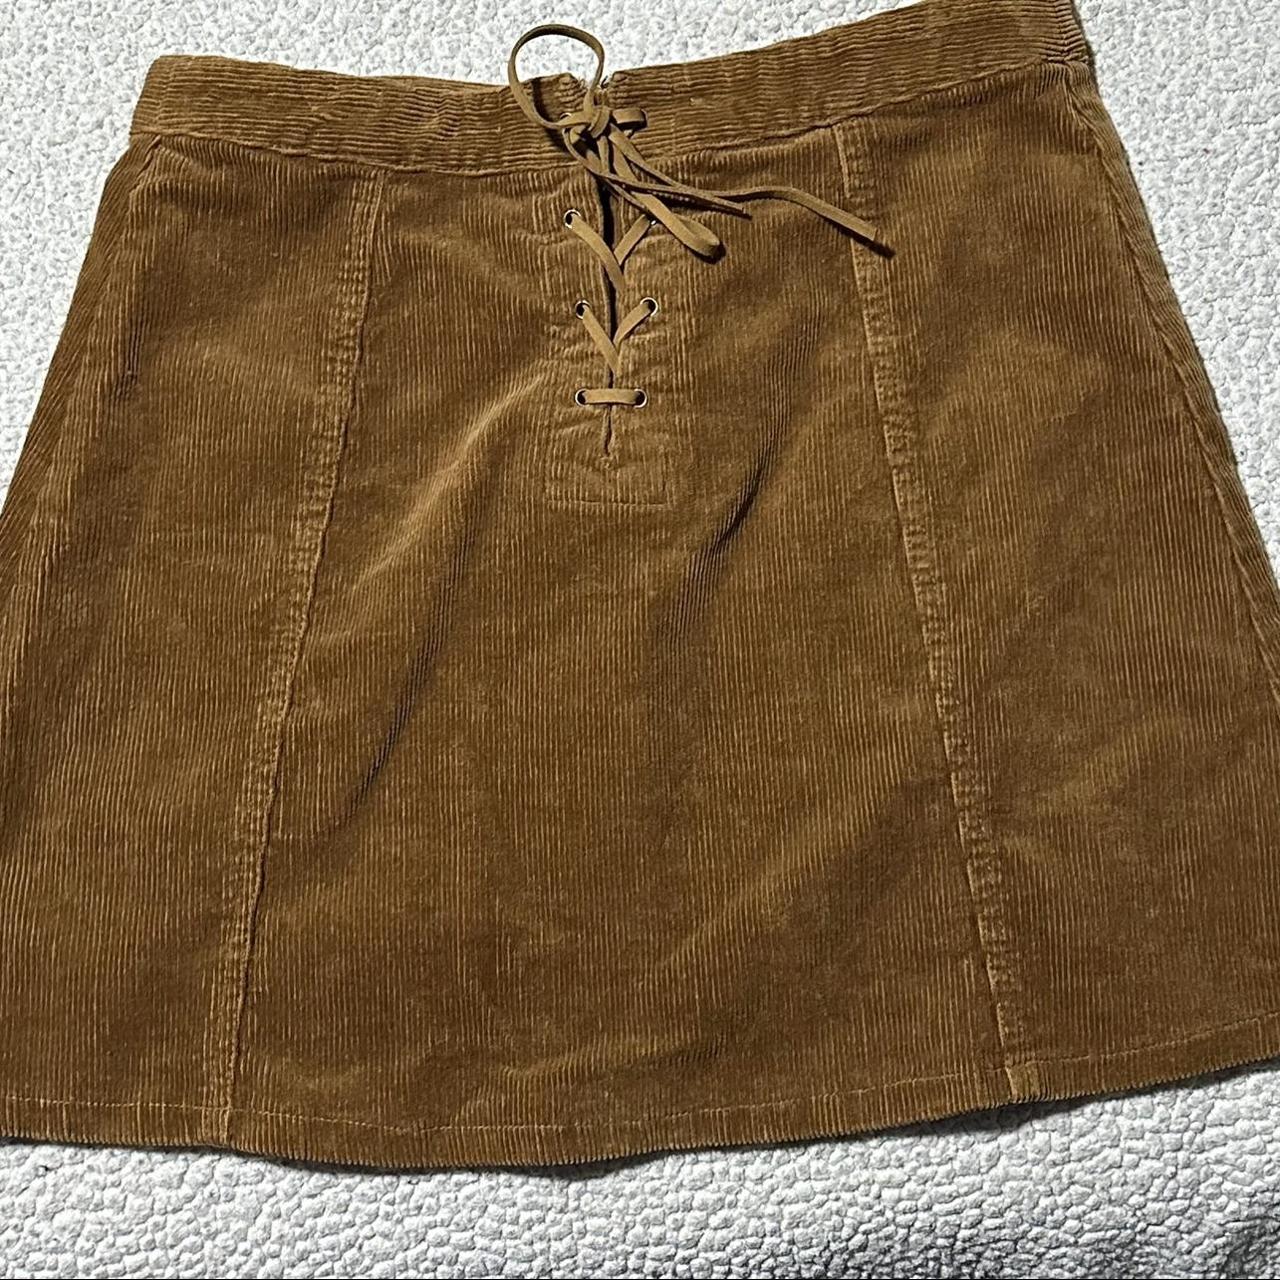 Brown Corduroy mini skirt Cute, affordable... - Depop